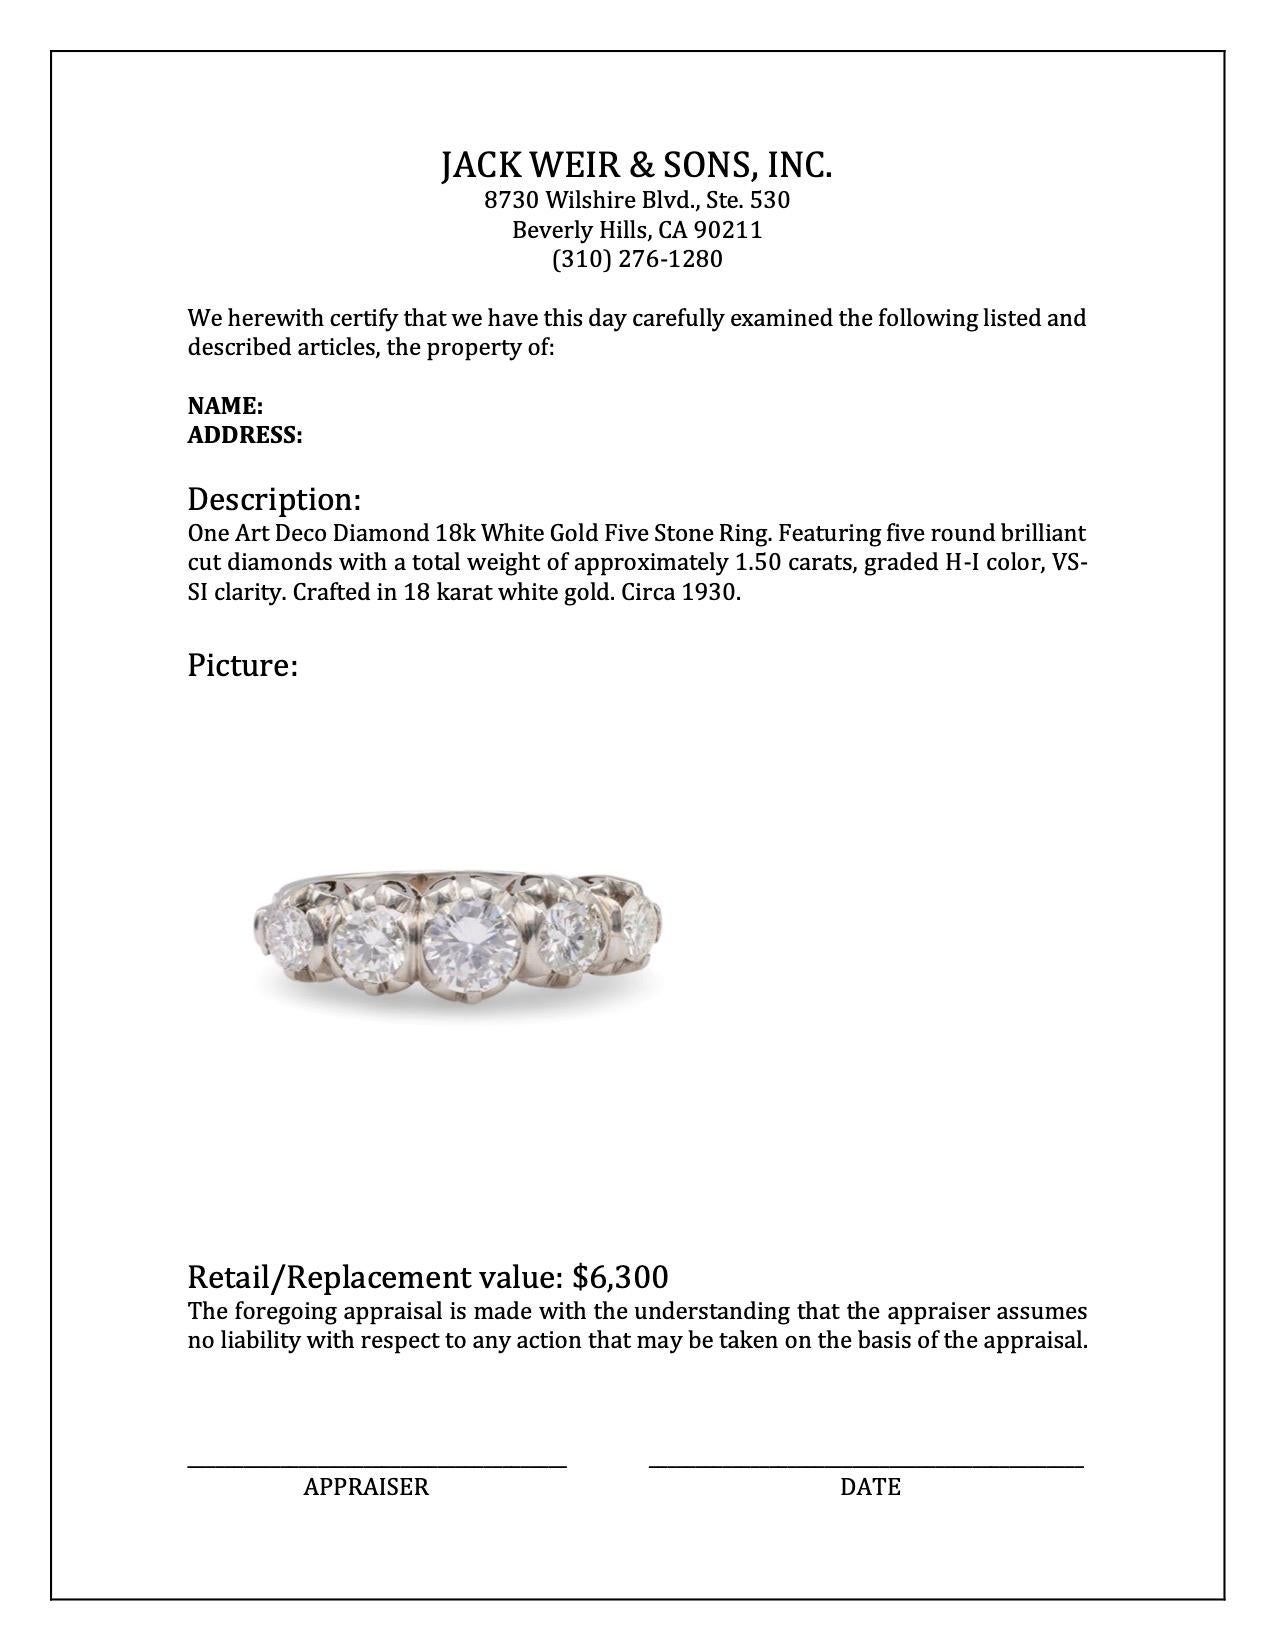 Art Deco Diamond 18k White Gold Five Stone Ring For Sale 1